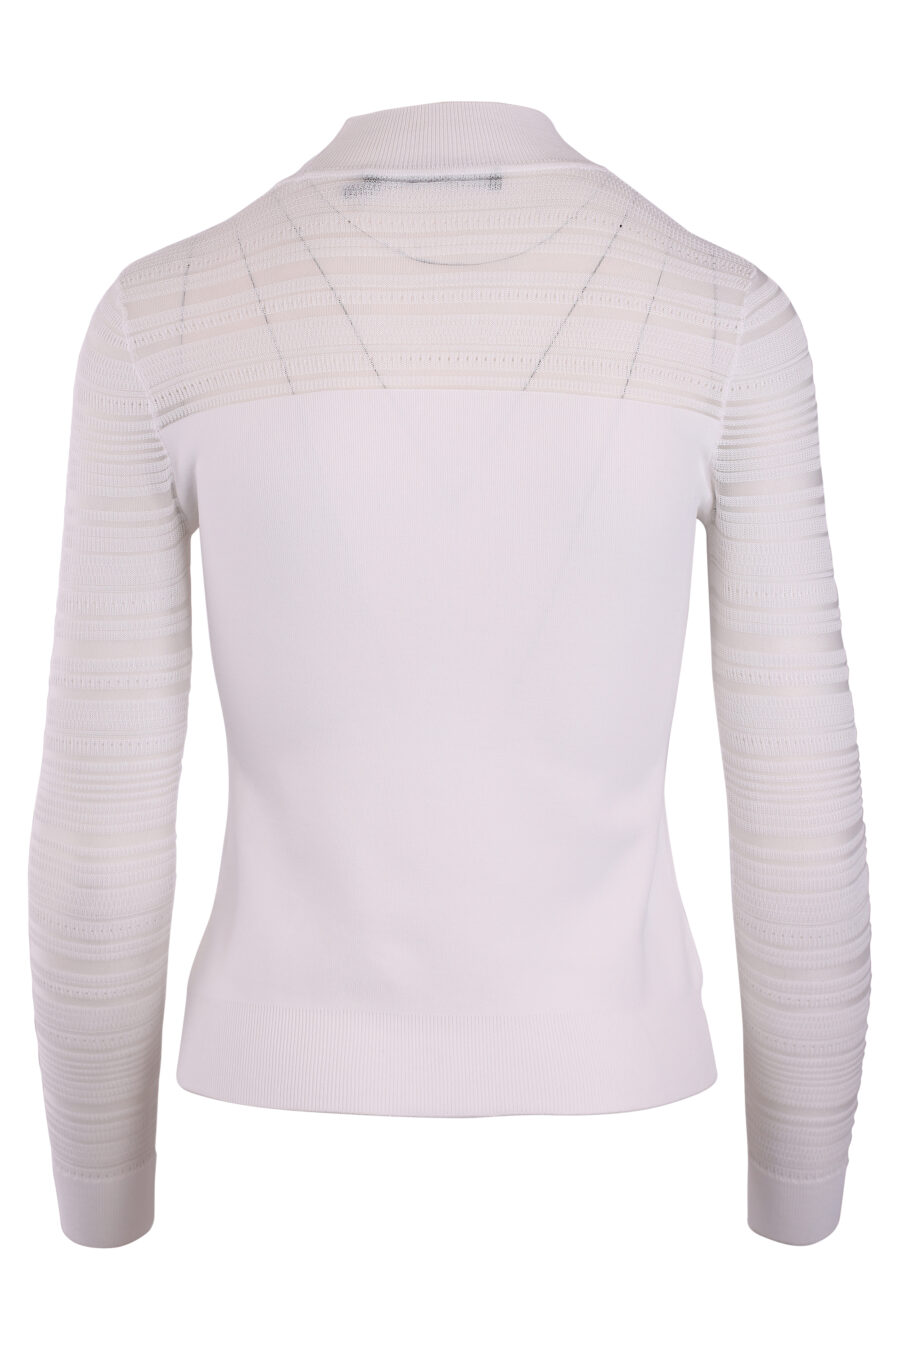 Semitransparentes langärmeliges weißes T-Shirt - IMG 3262